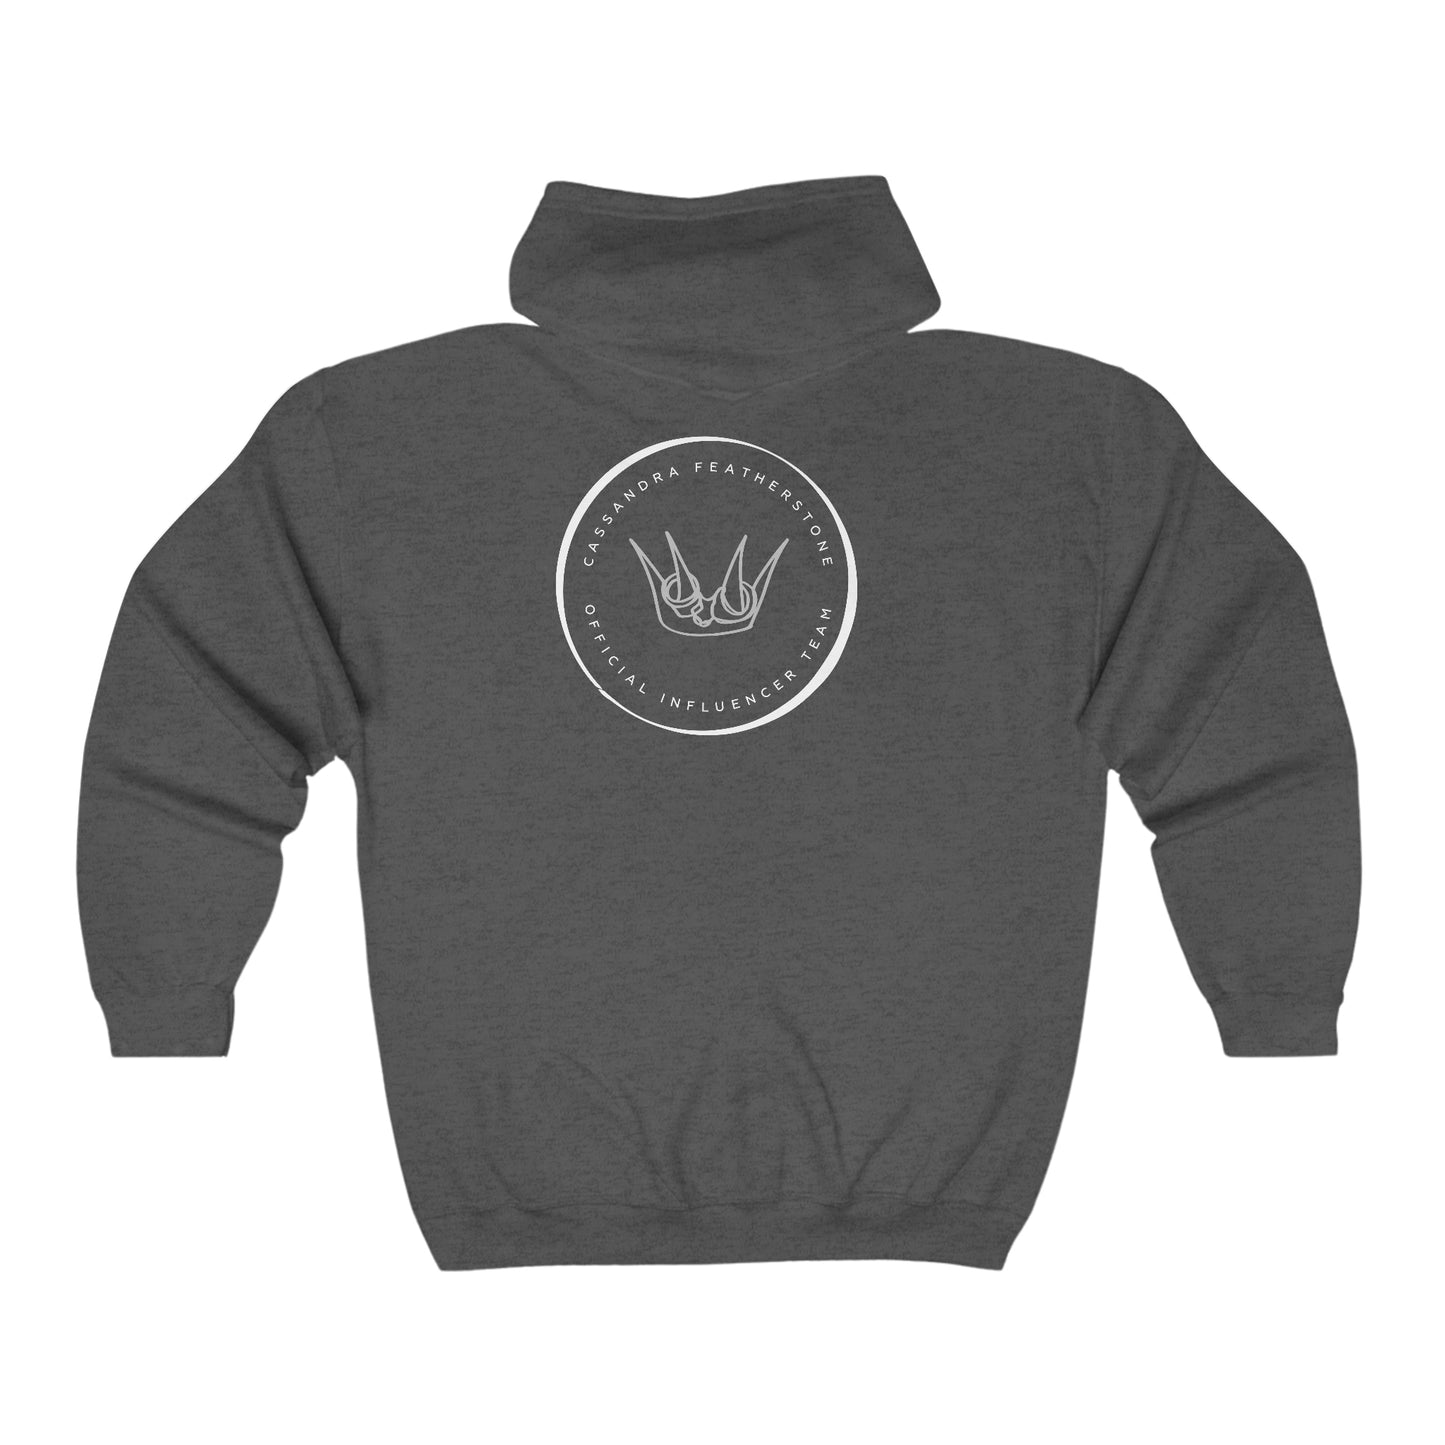 Influencer Team Full Zip Hooded Sweatshirt